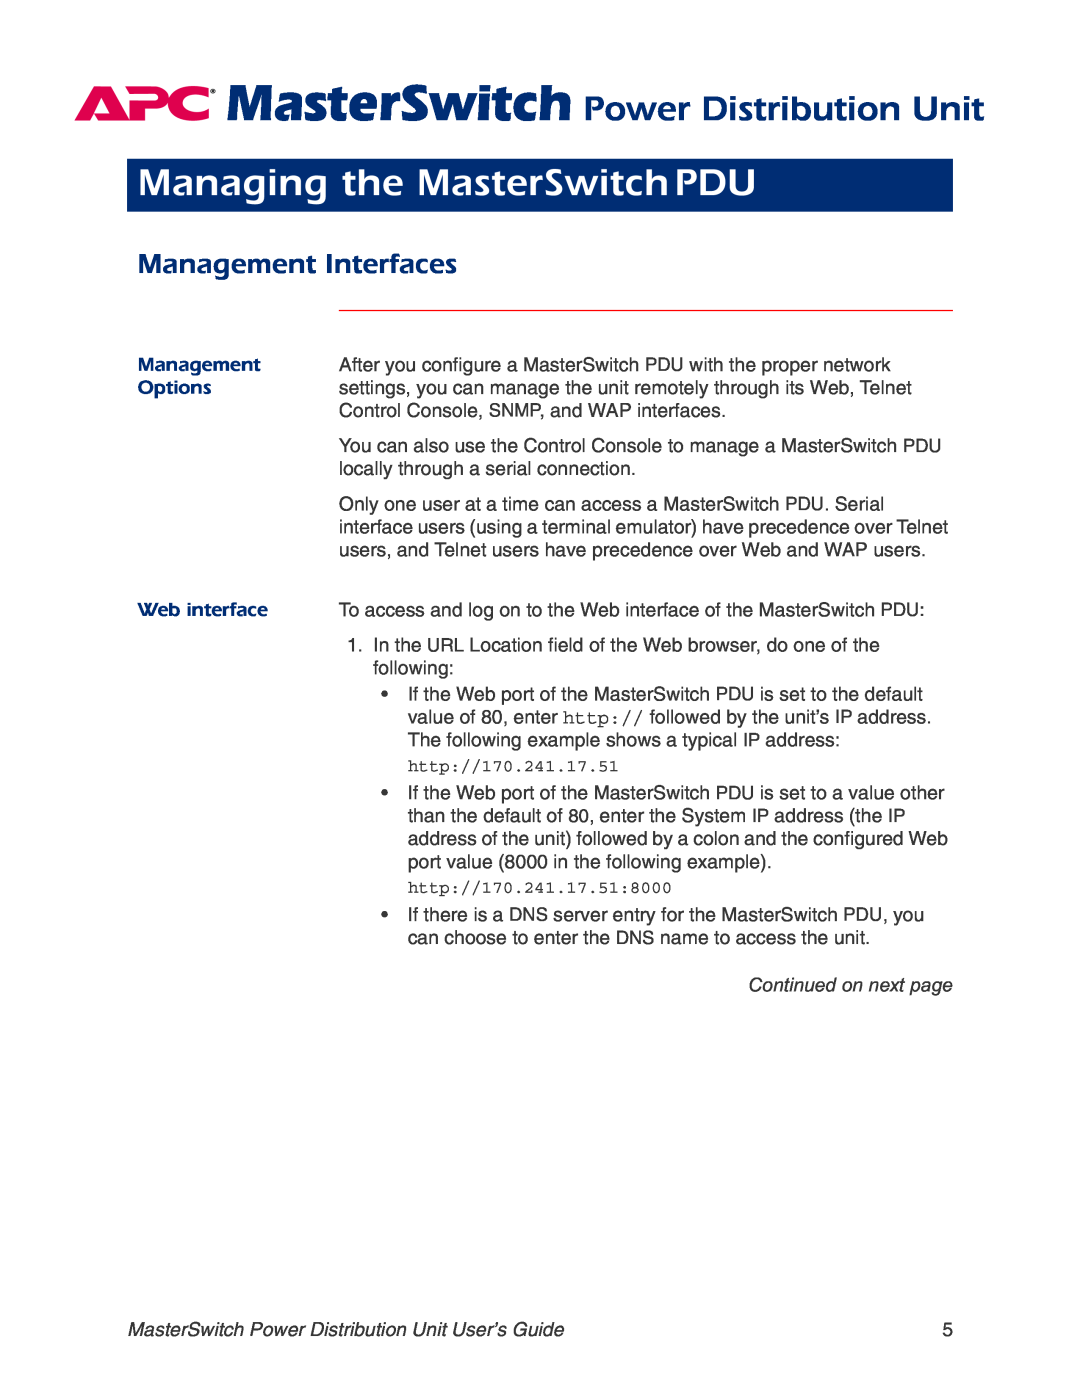 APC AP9211, AP9218 Managing the MasterSwitch PDU, Management Interfaces, Options, MasterSwitch Power Distribution Unit 